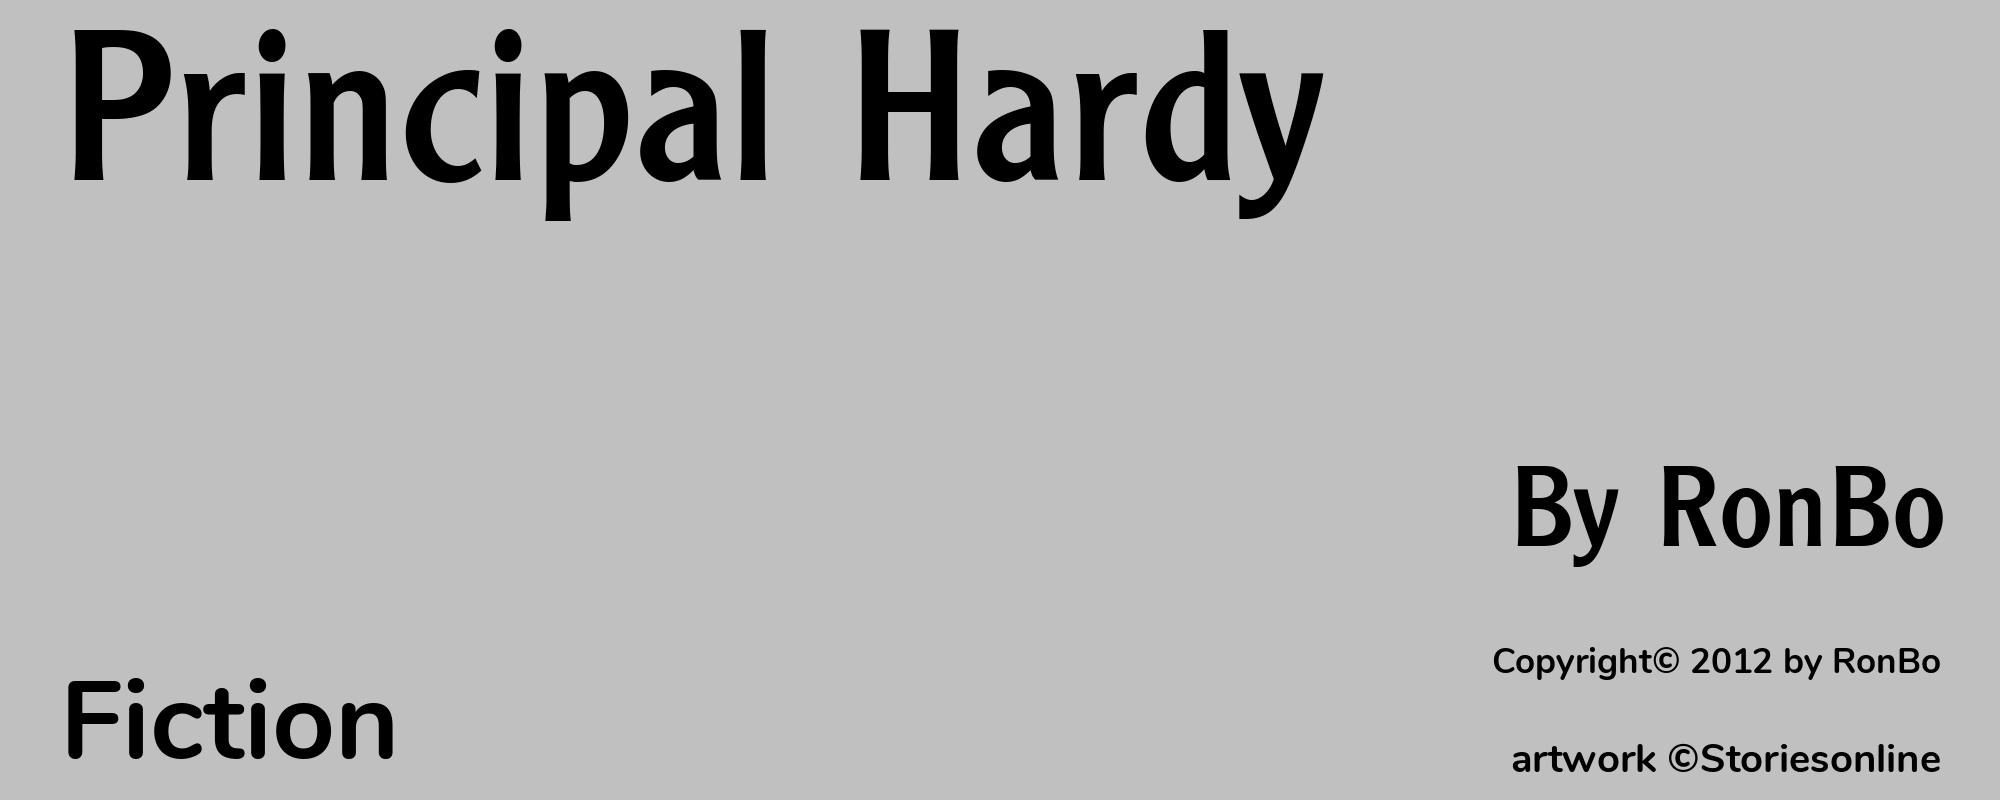 Principal Hardy - Cover